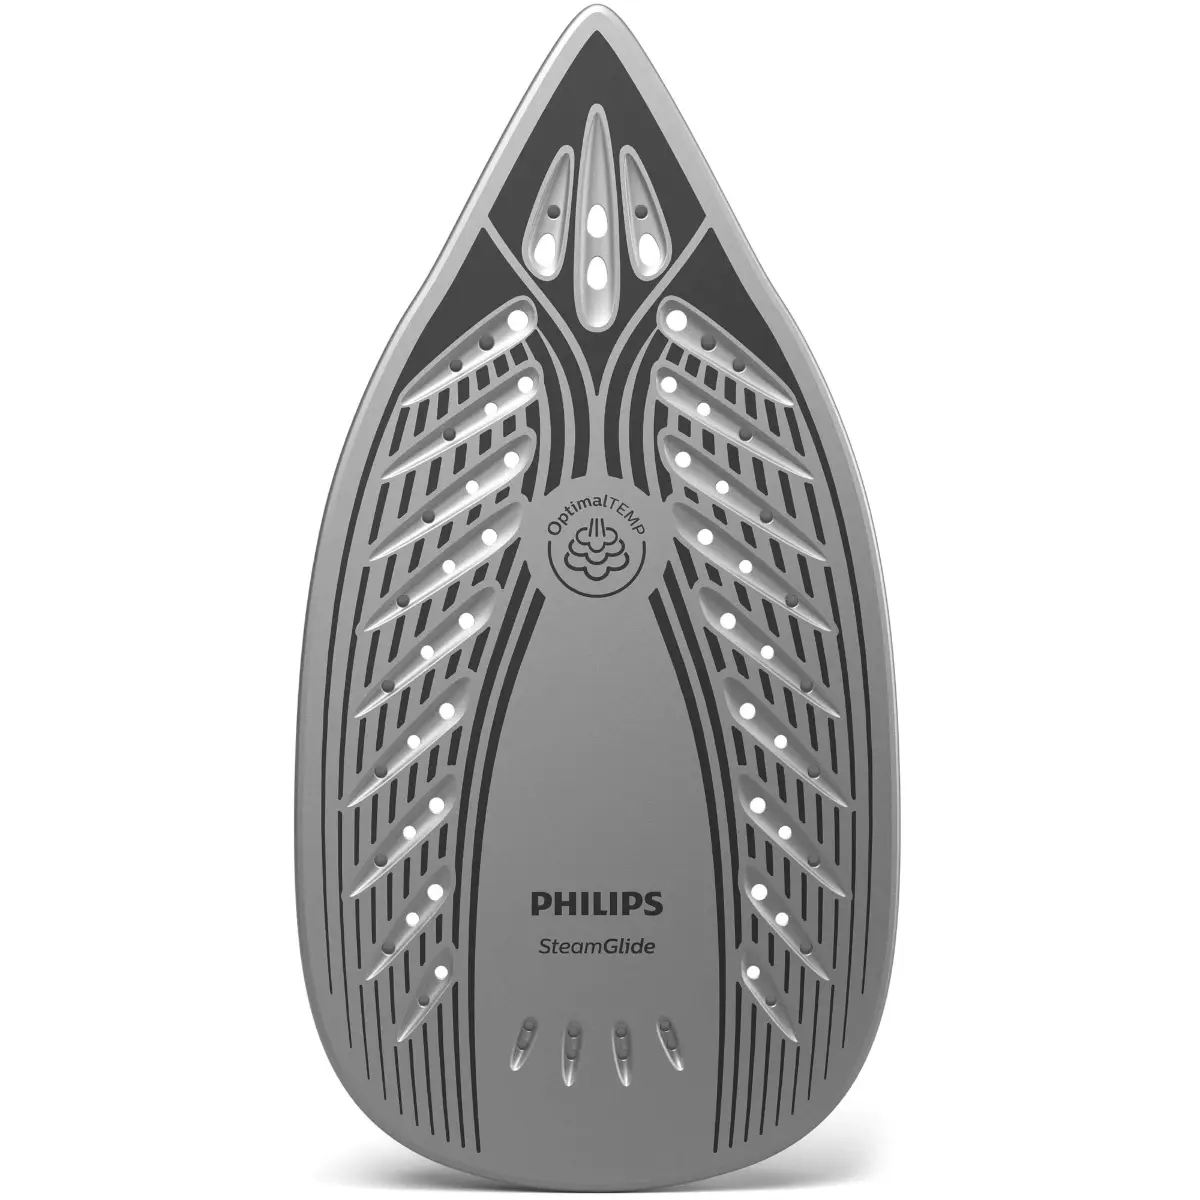 Statie de calcat Philips GC7920/20, 2400 W, OptimalTemp, abur 120 g/min, Smart Calc Clean, talpa SteamGlide, 1.5 L, Albastru